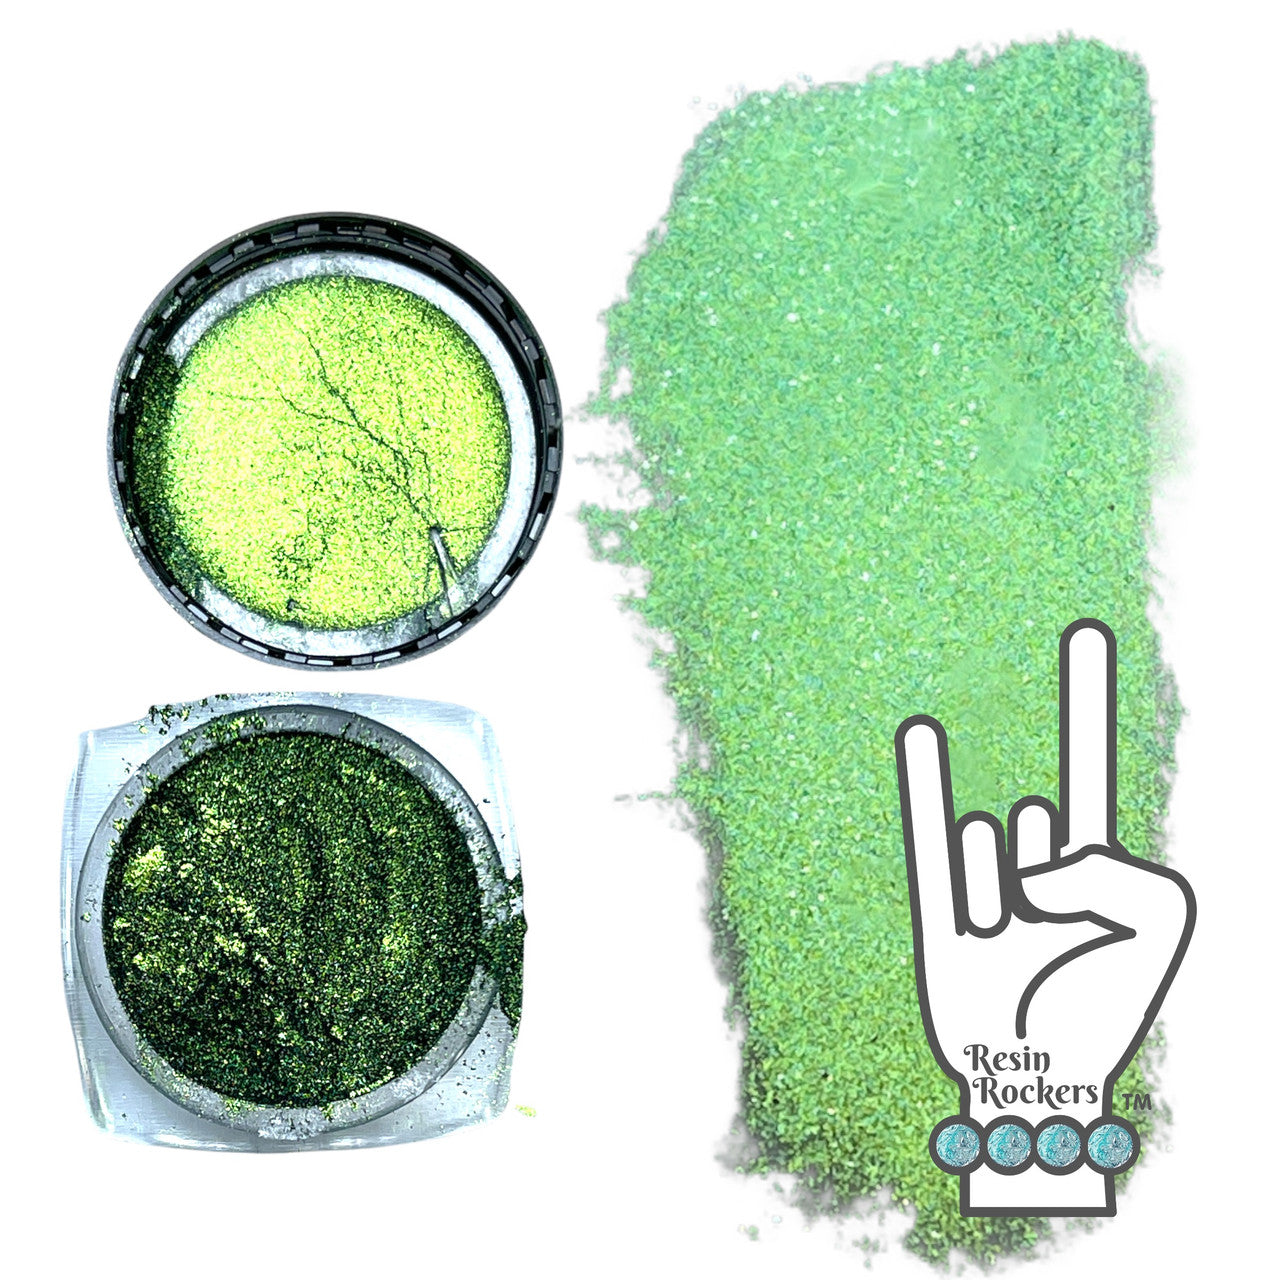 Resin Rockers Premium Chrome Reflection Pigment Powder Dragon Scales Green